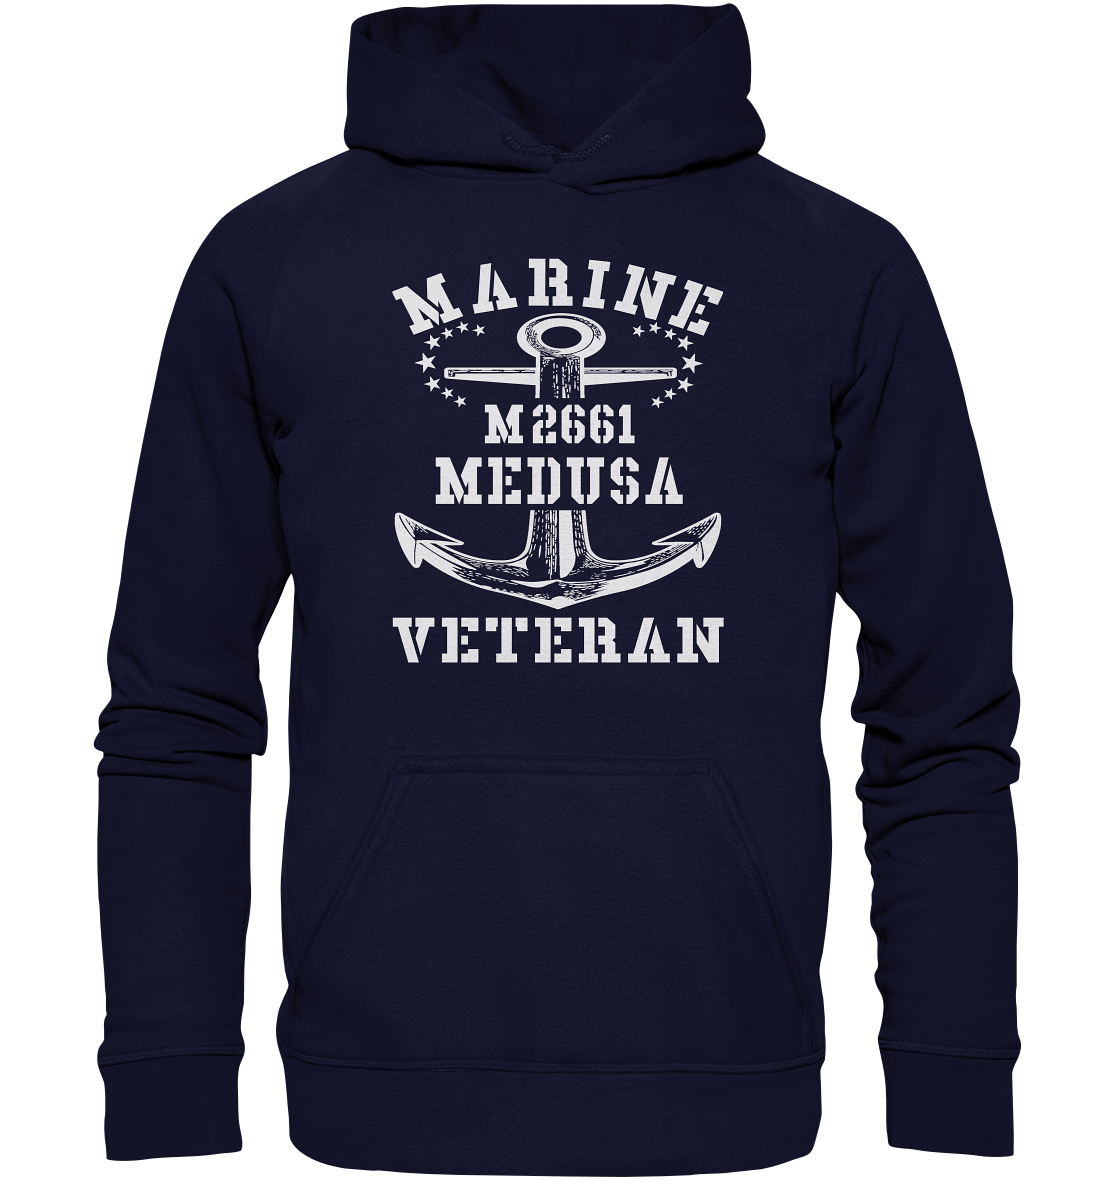 BiMi M2661 MEDUSA Marine Veteran - Basic Unisex Hoodie XL